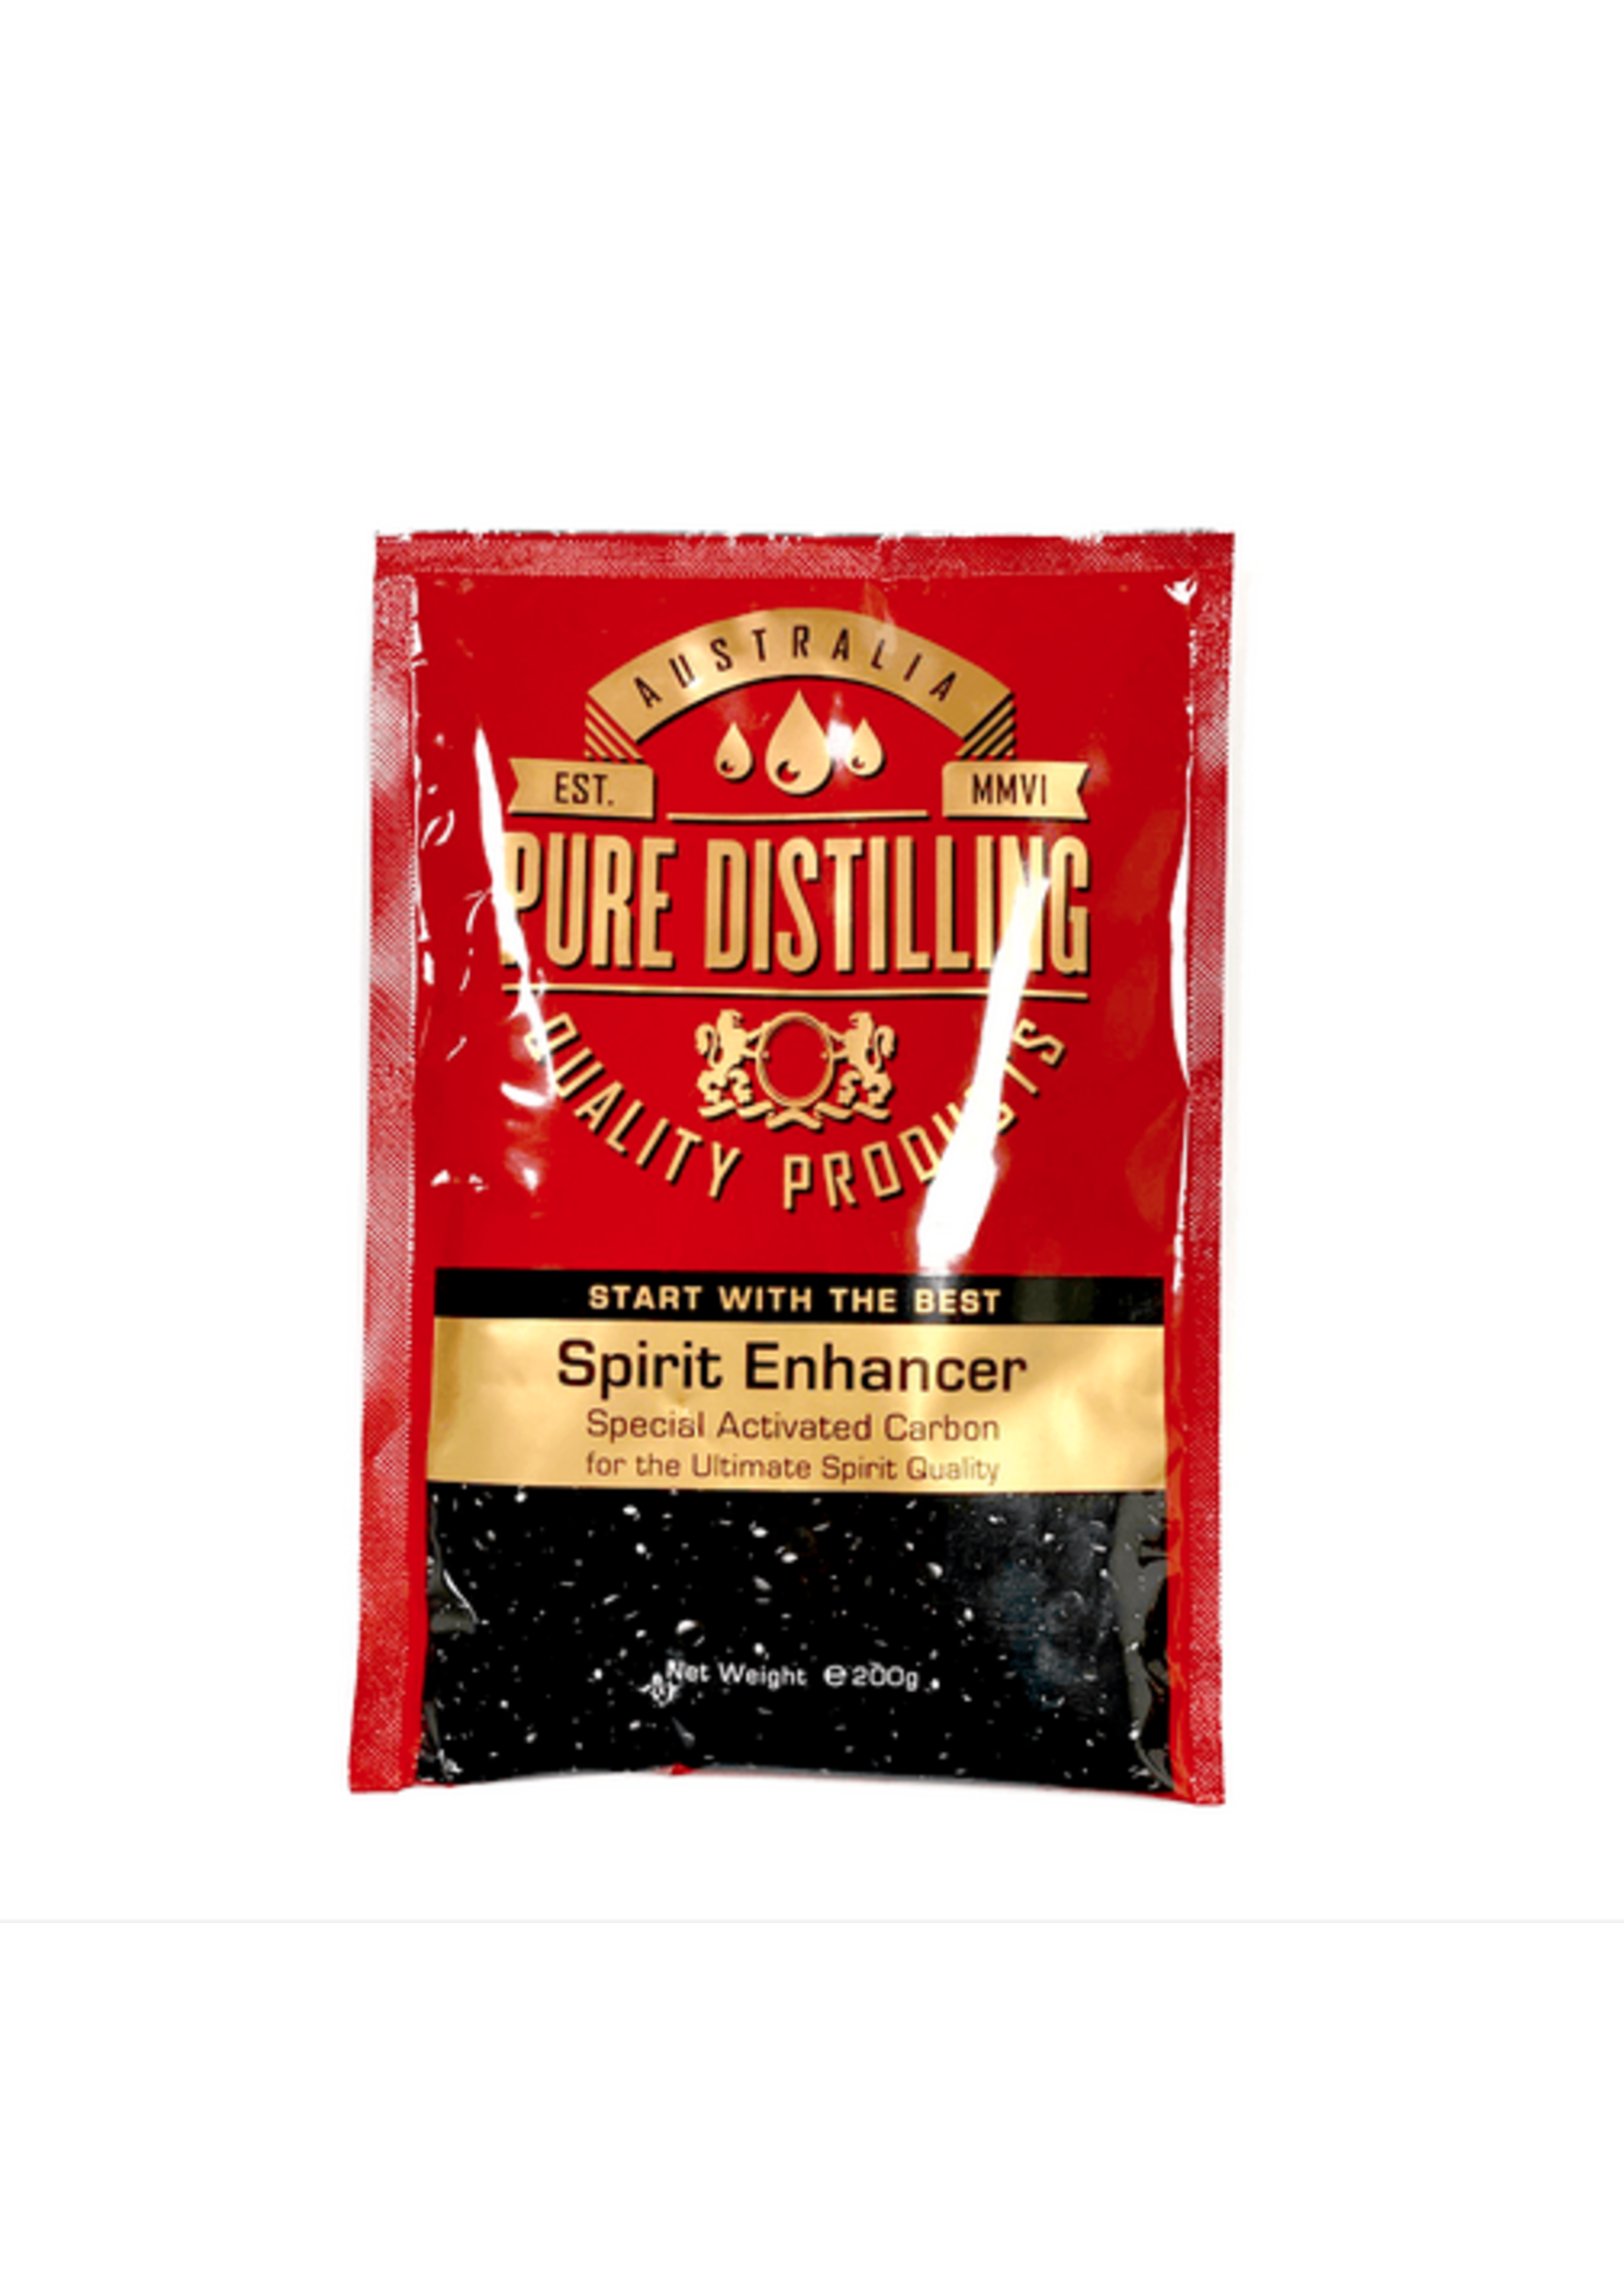 Pure distilling pure distilling spirit enhancer